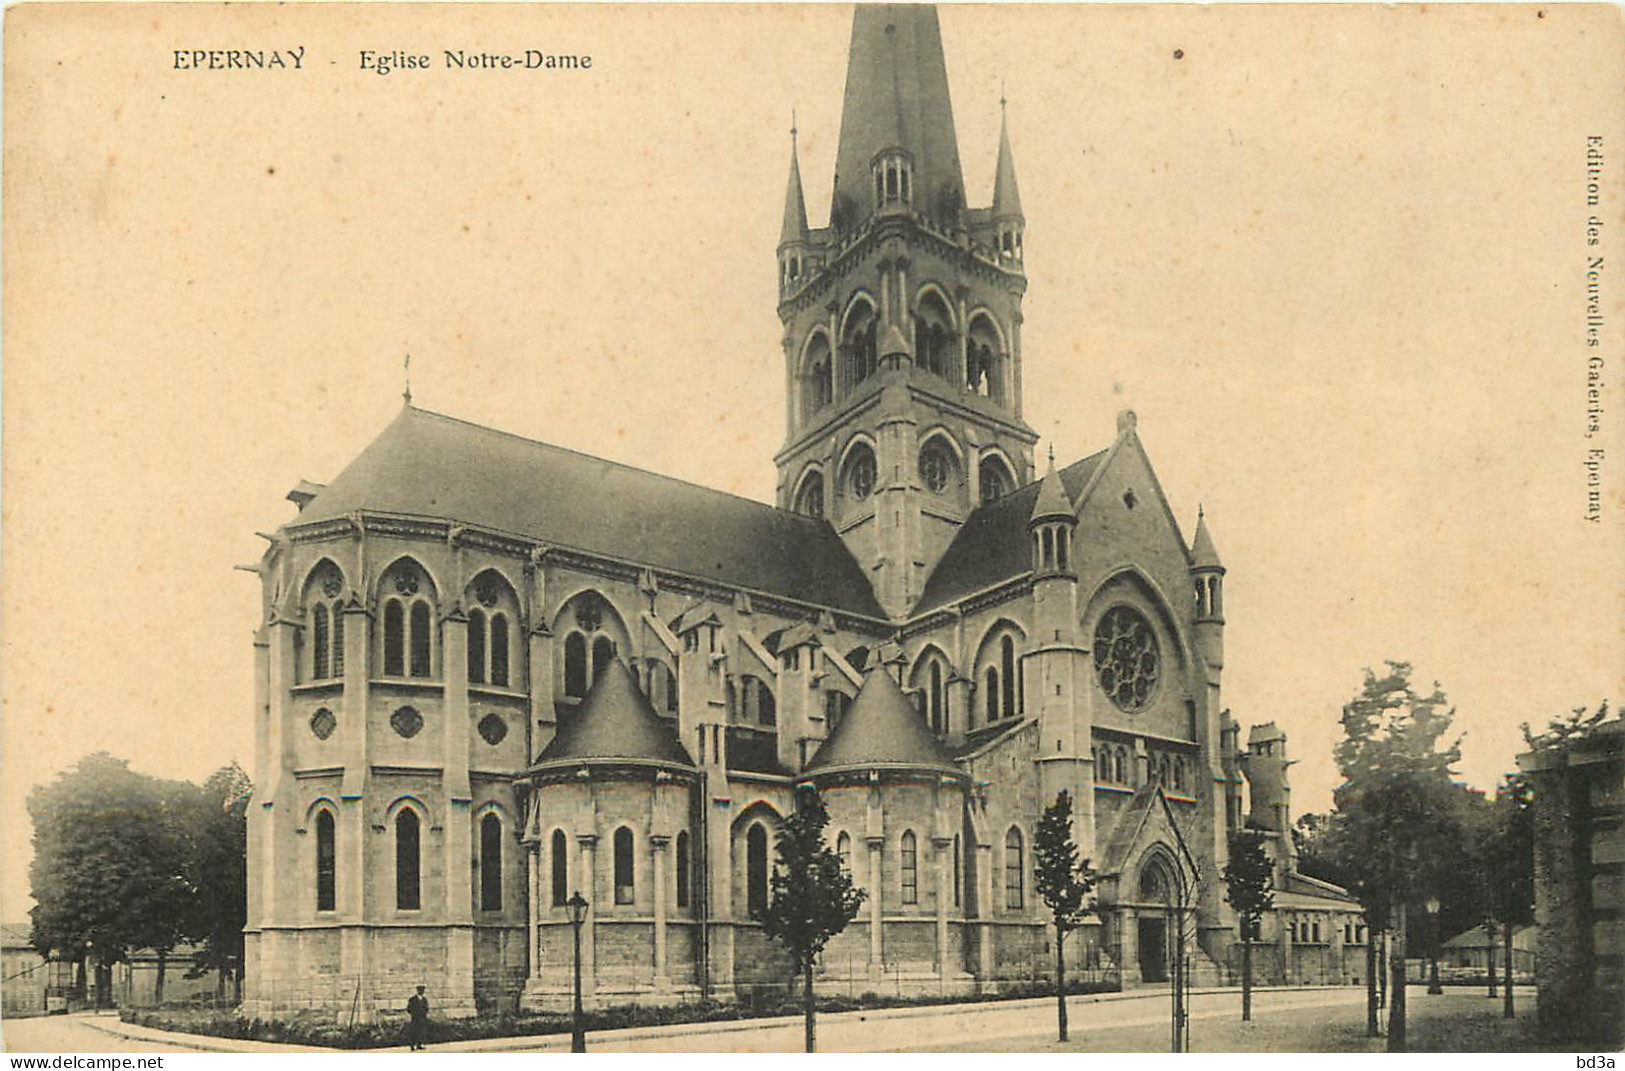  51 - EPERNAY - Eglise Notre Dame - Esternay